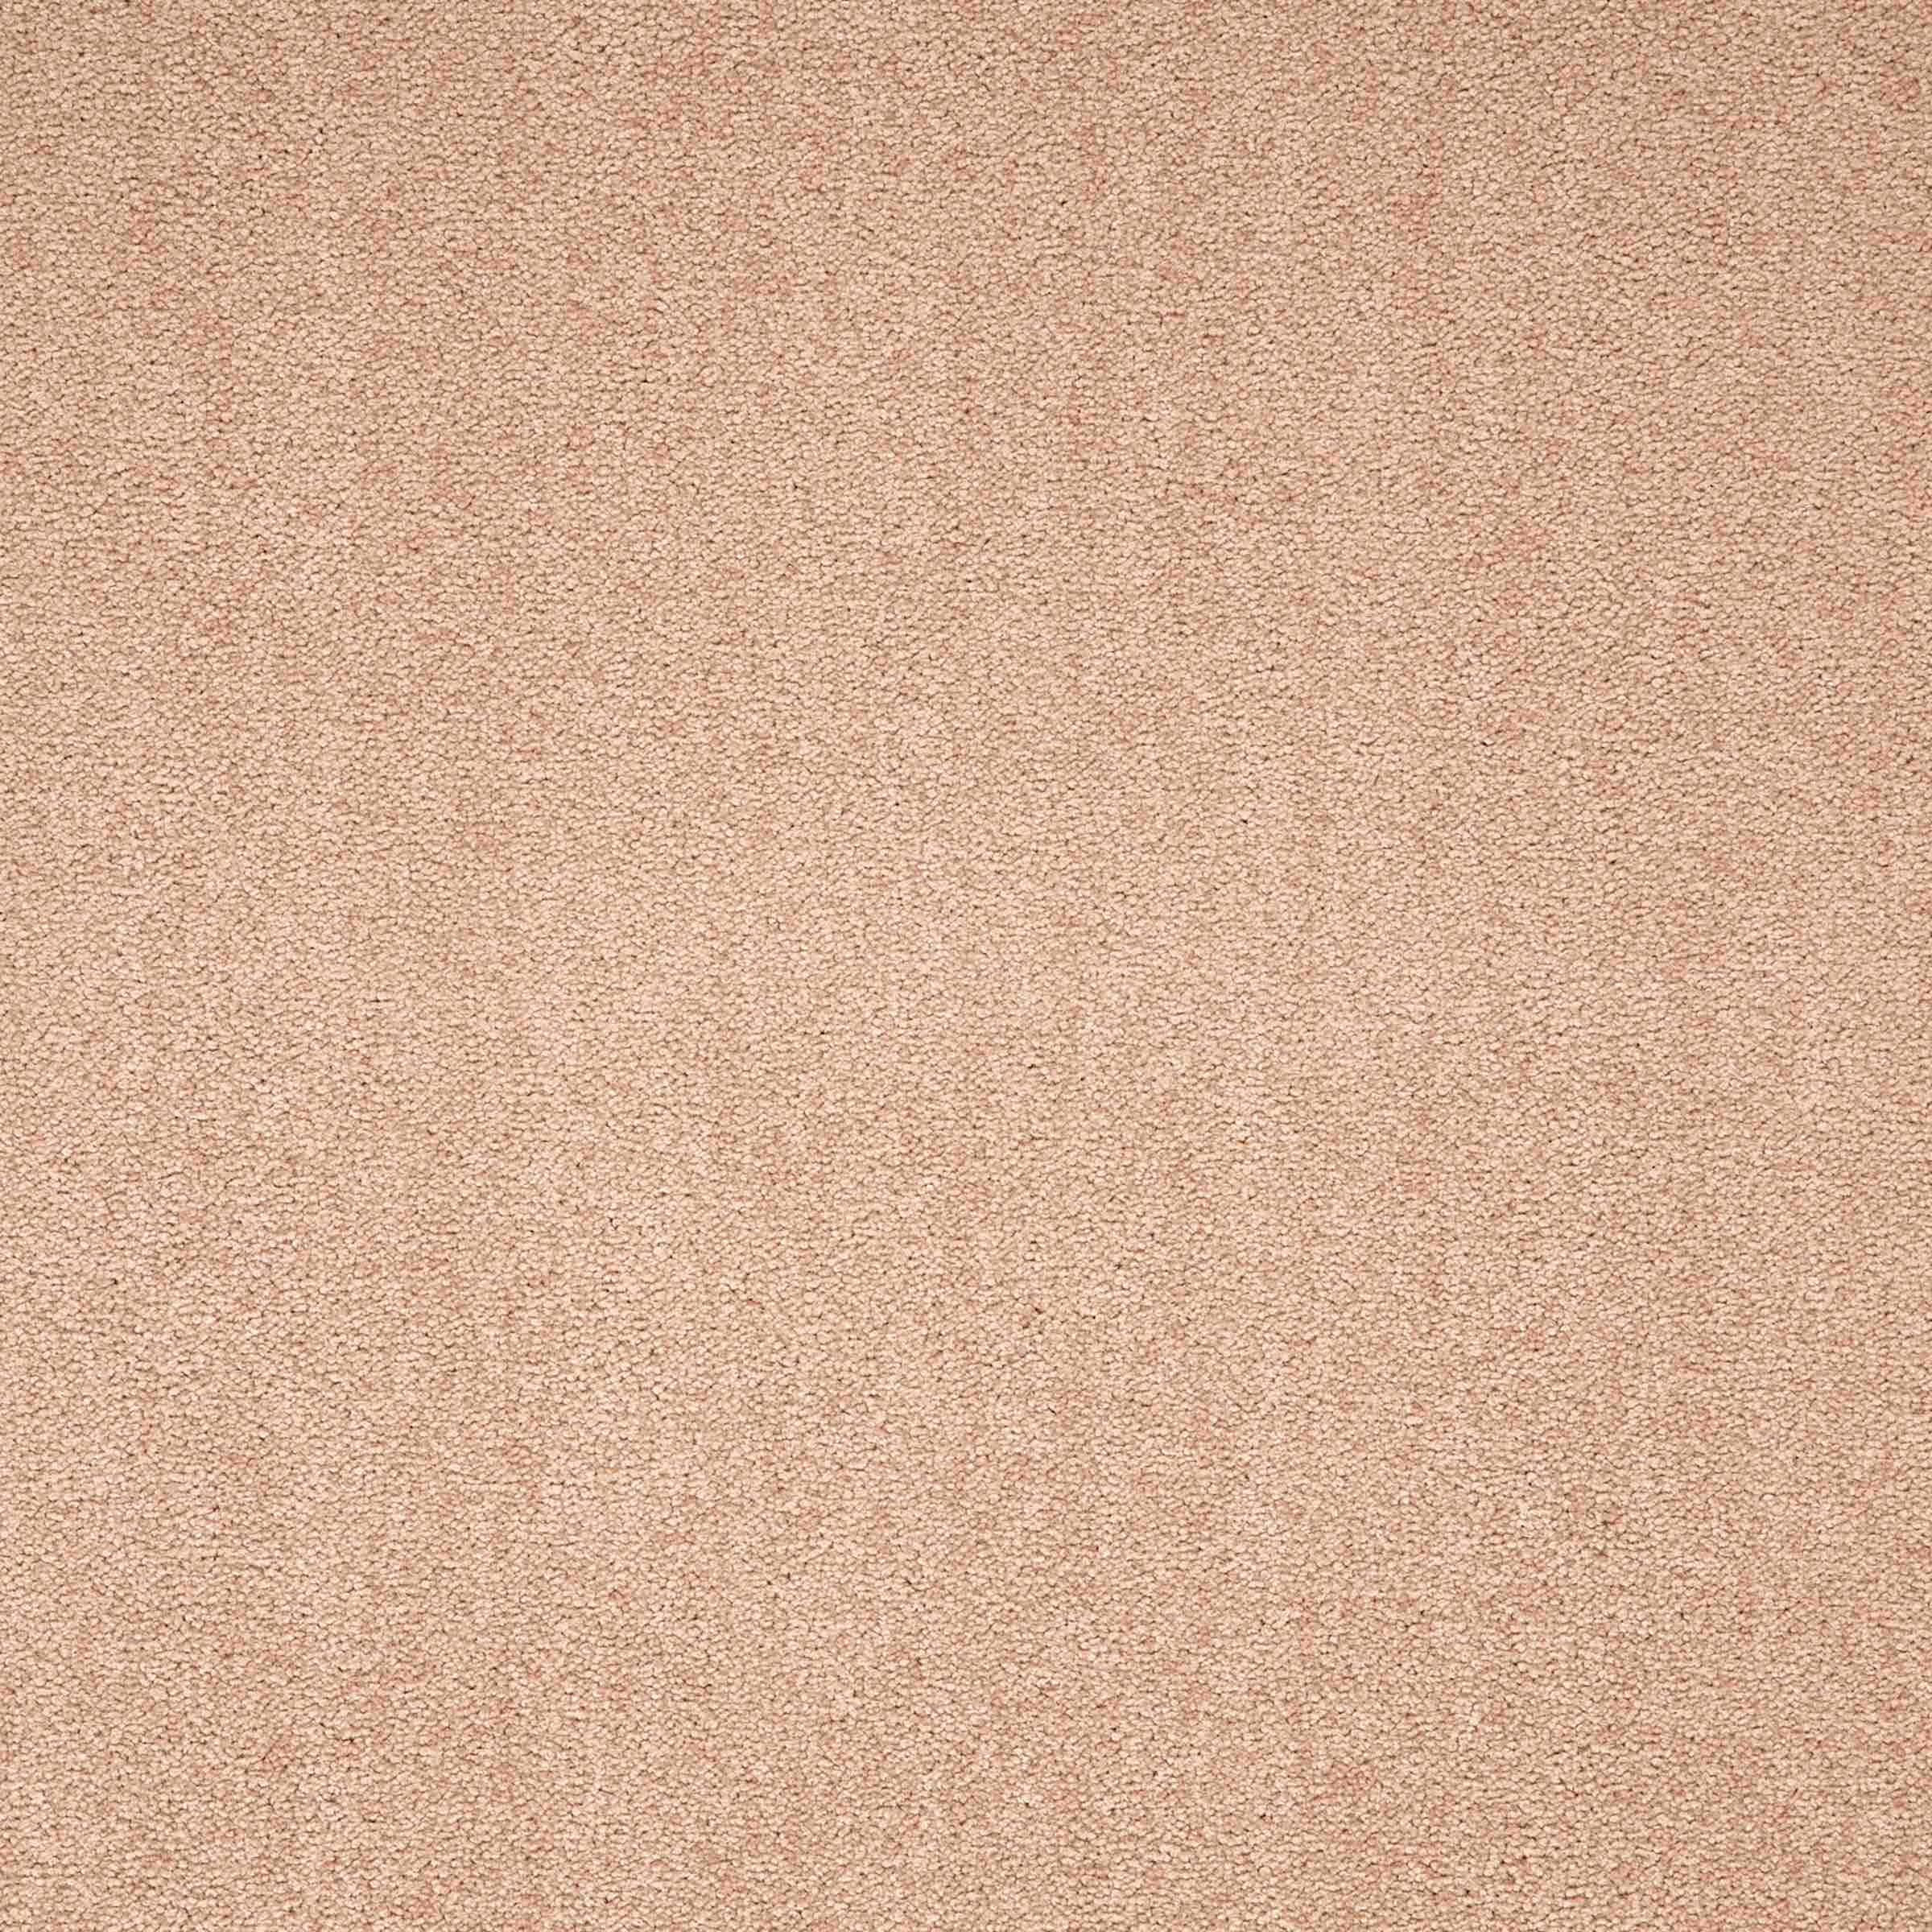 Maestro | Nutshell, 386 | Paragon Carpet Tiles | Commercial Carpet Tiles